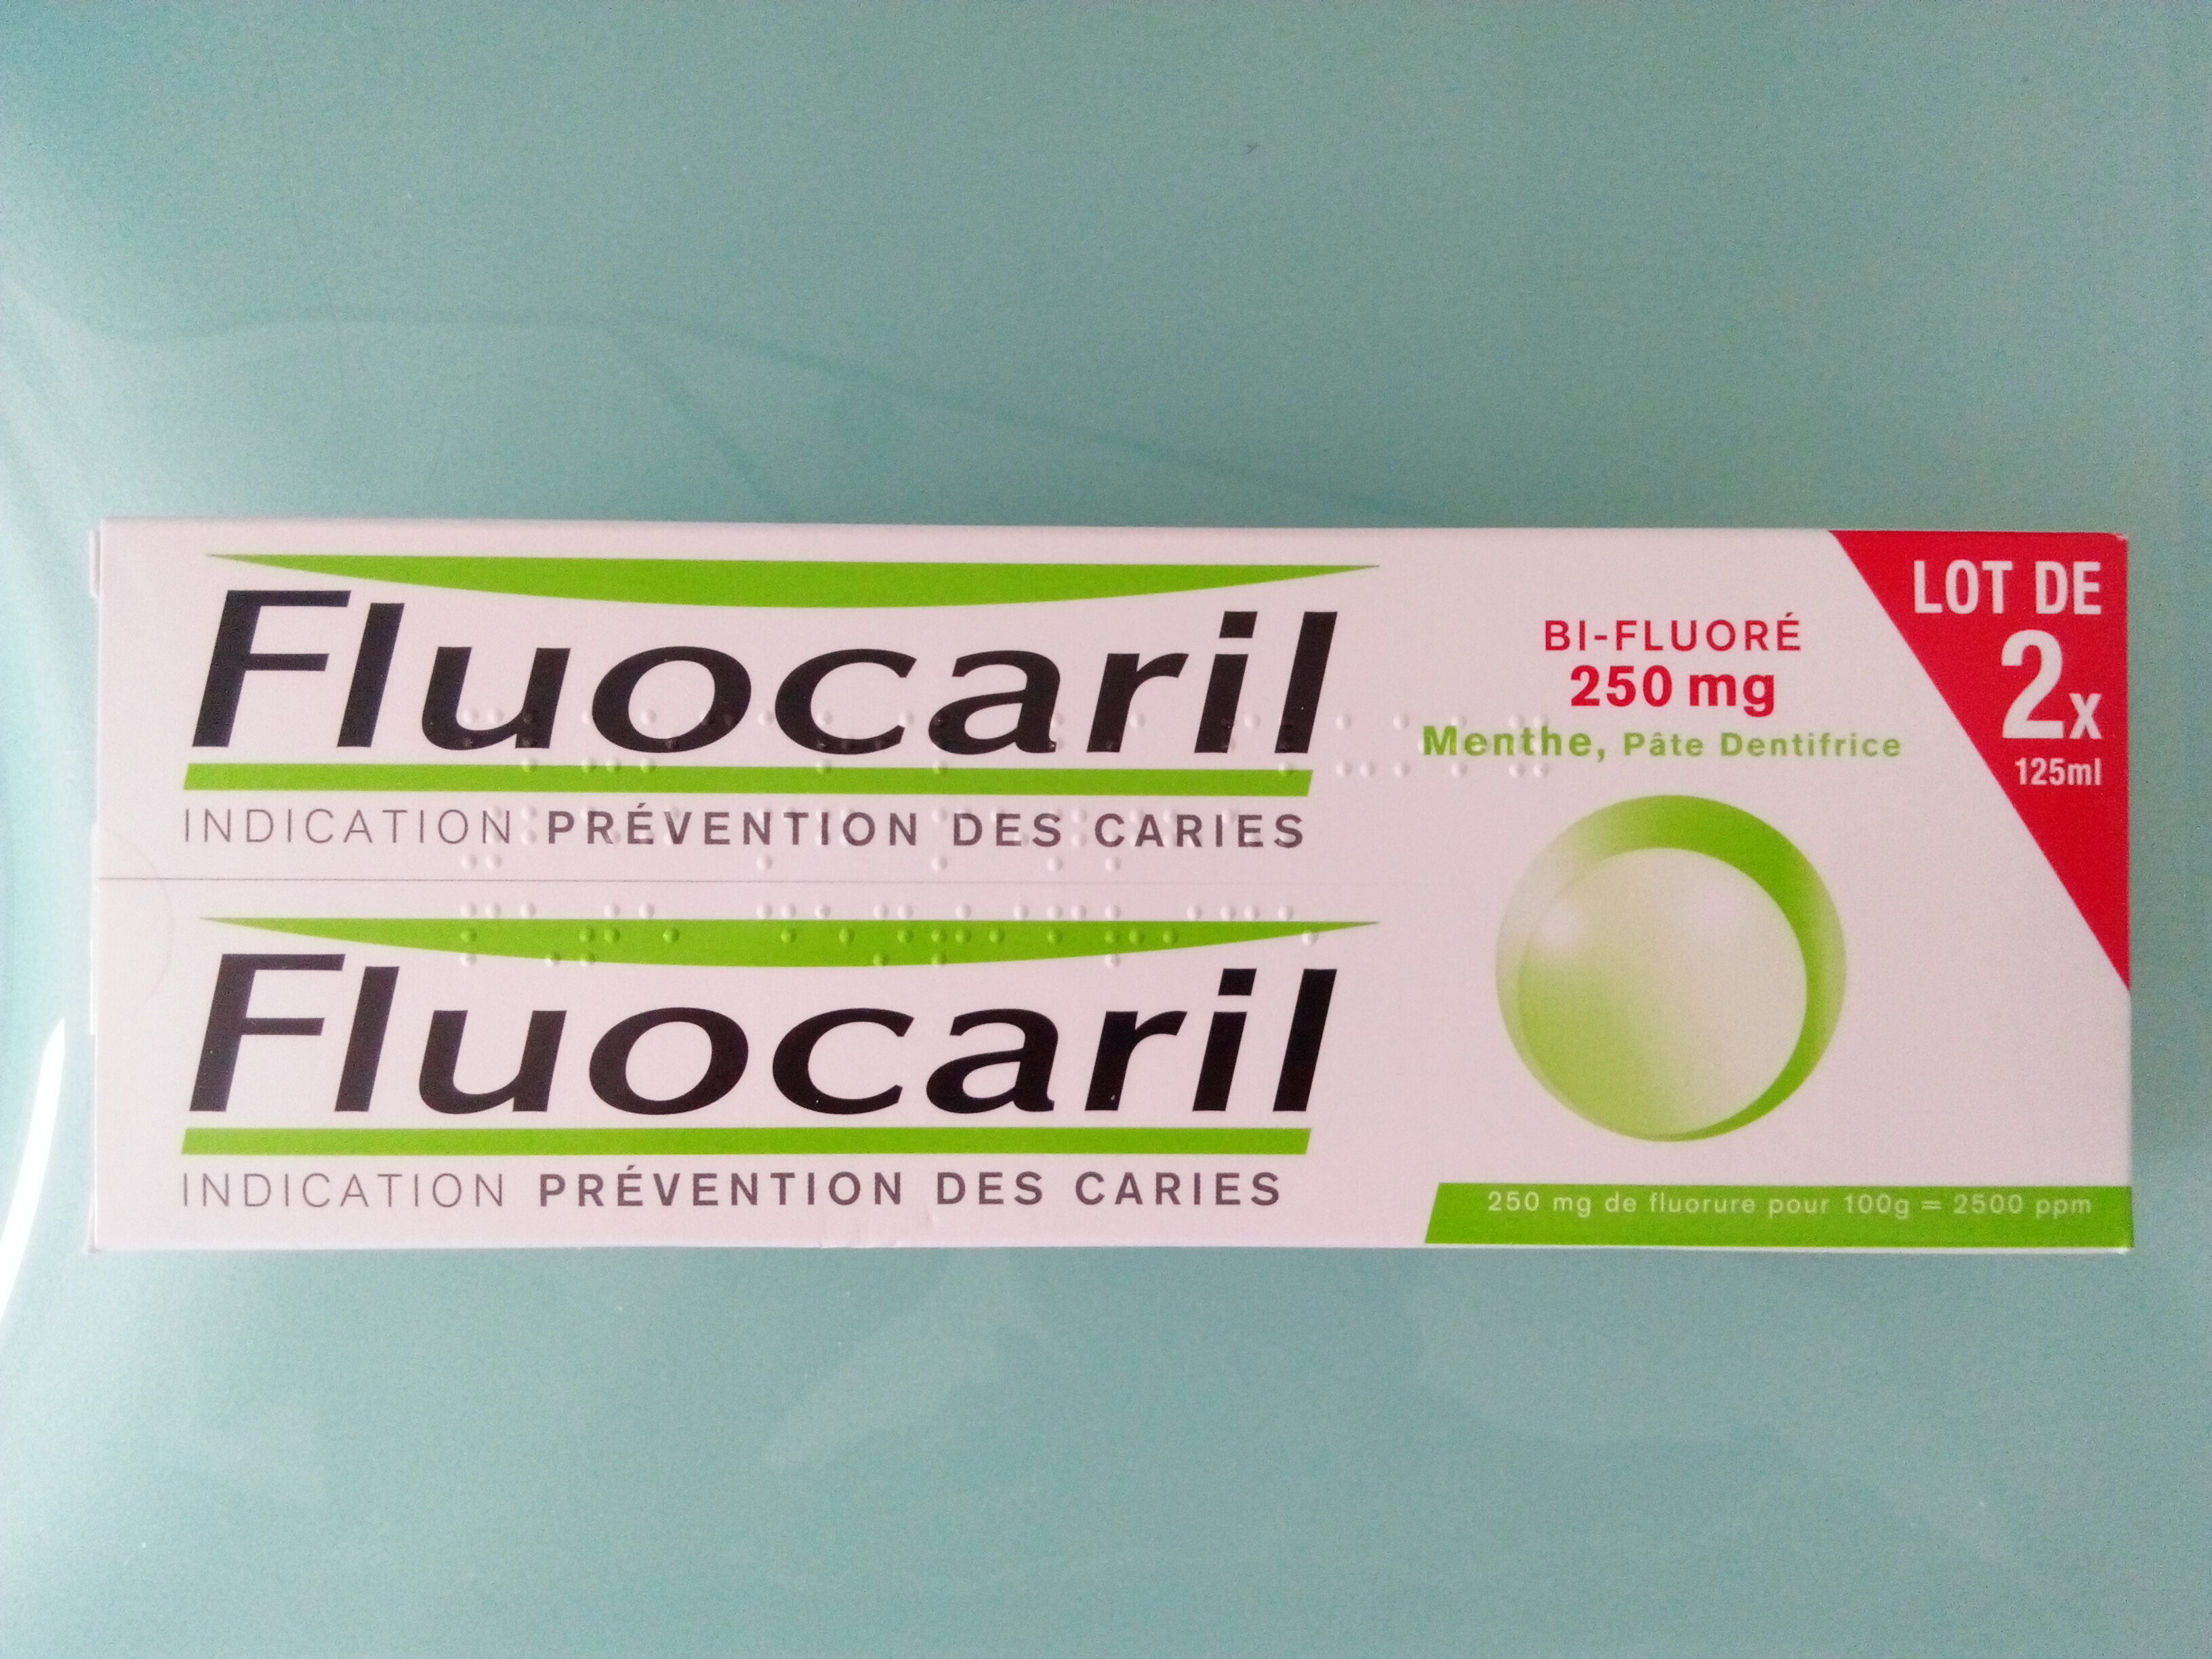 Bi-fluoré 250 mg - Product - fr